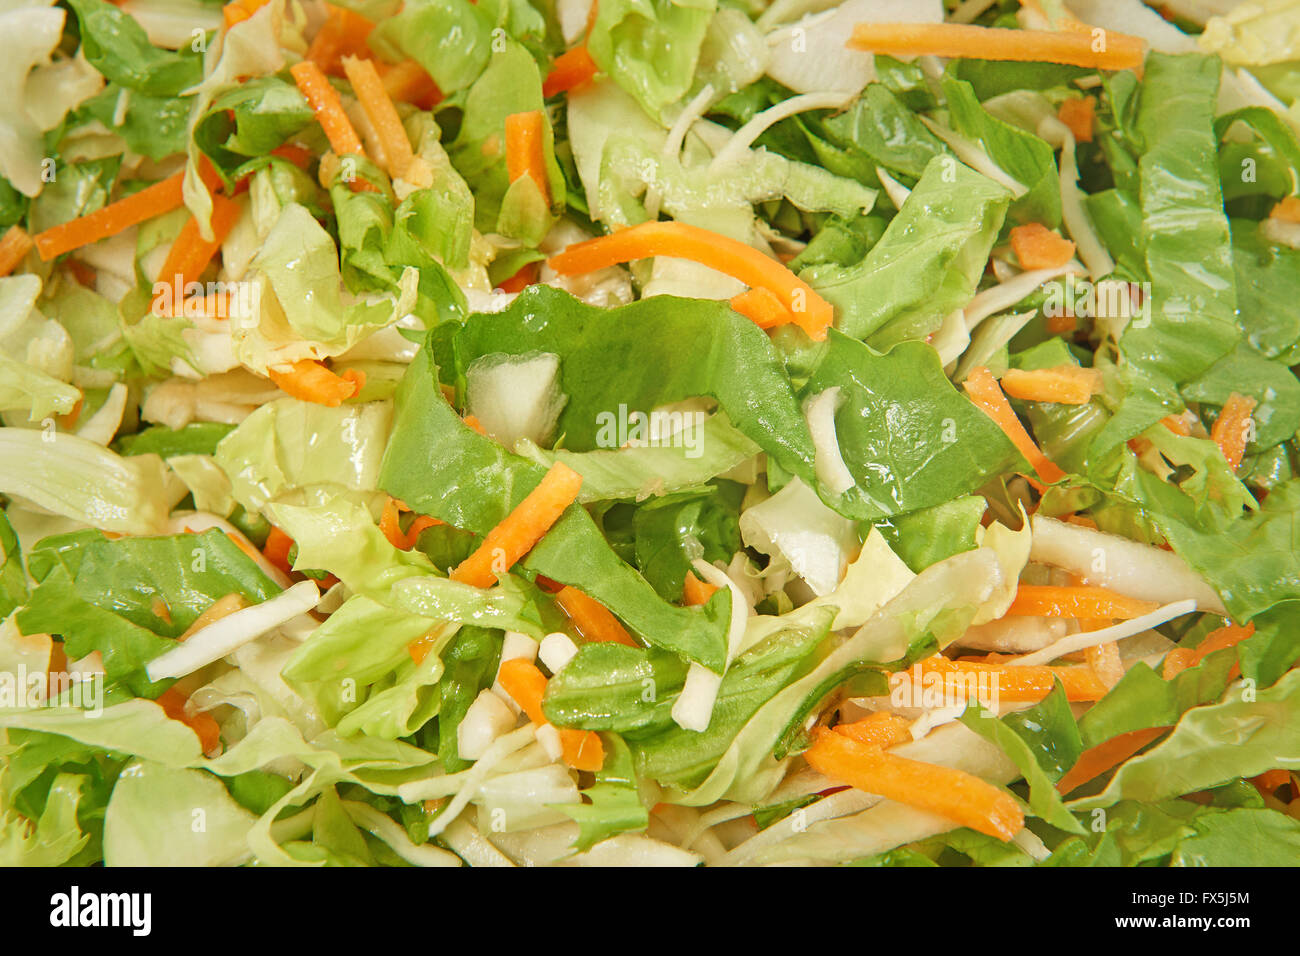 Closeup image of ecological chopped mixed salad Stock Photo